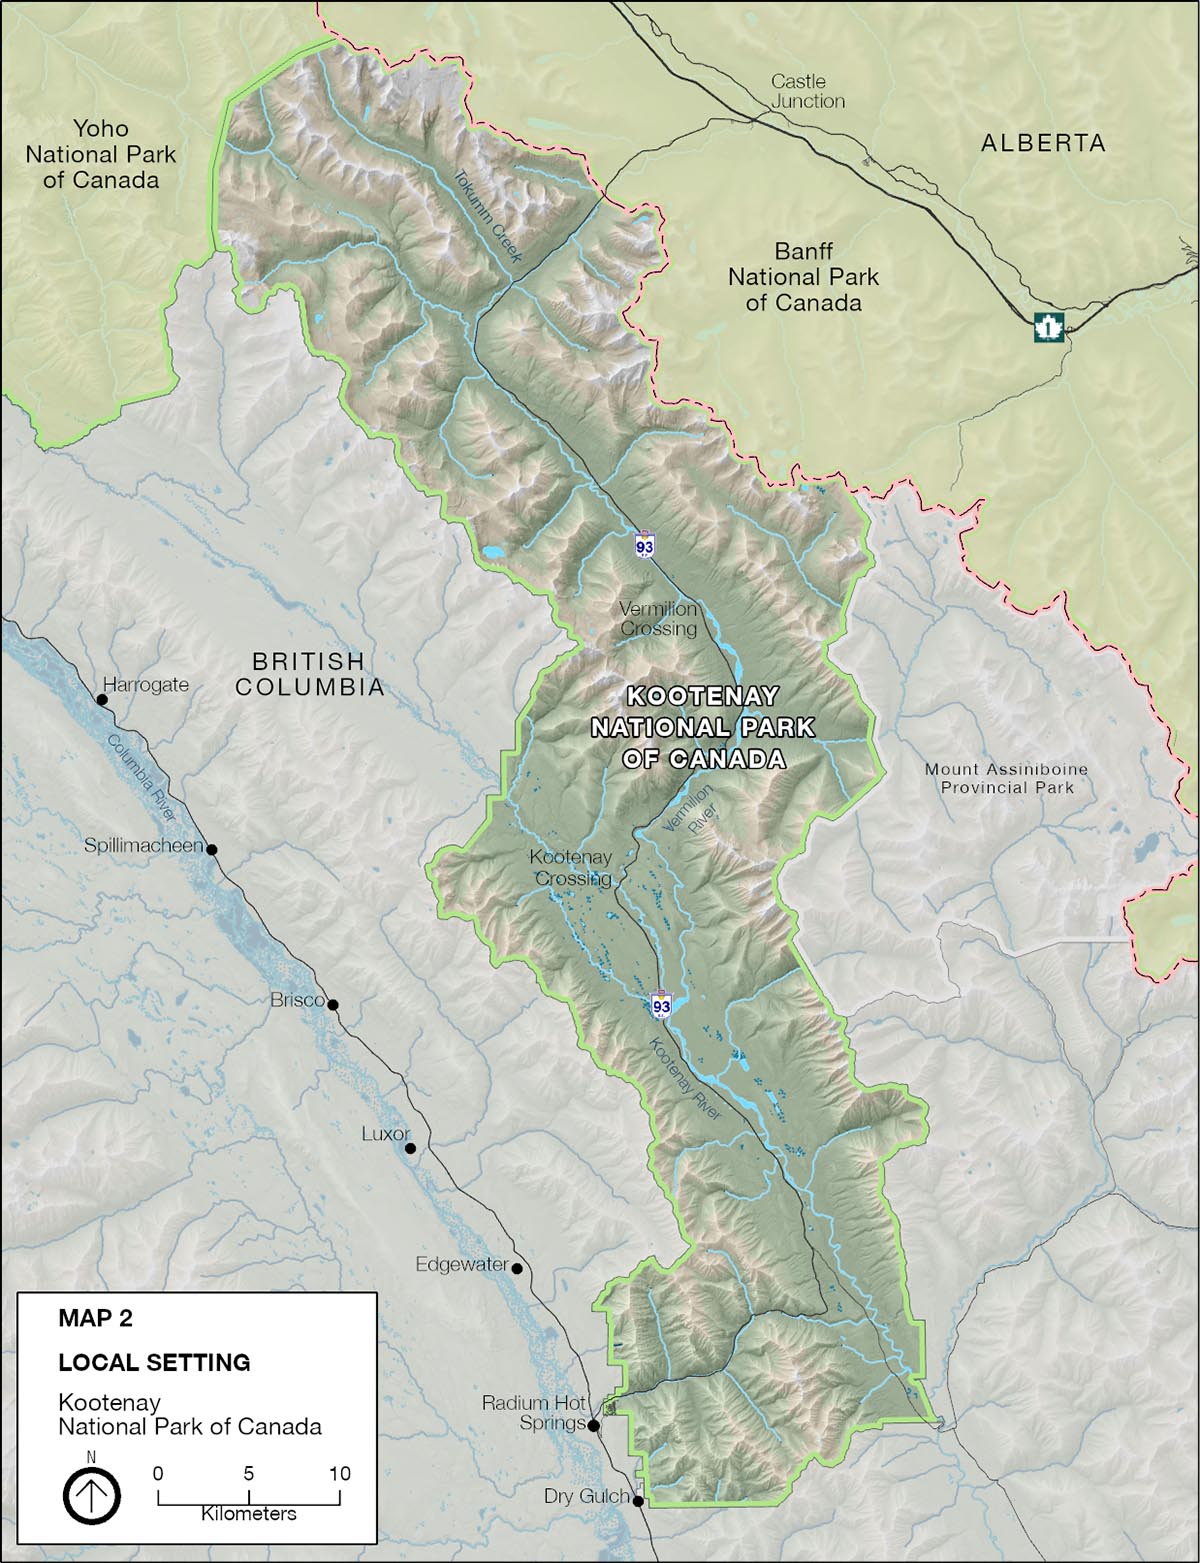 Map 2: Local setting – Kootenay National Park